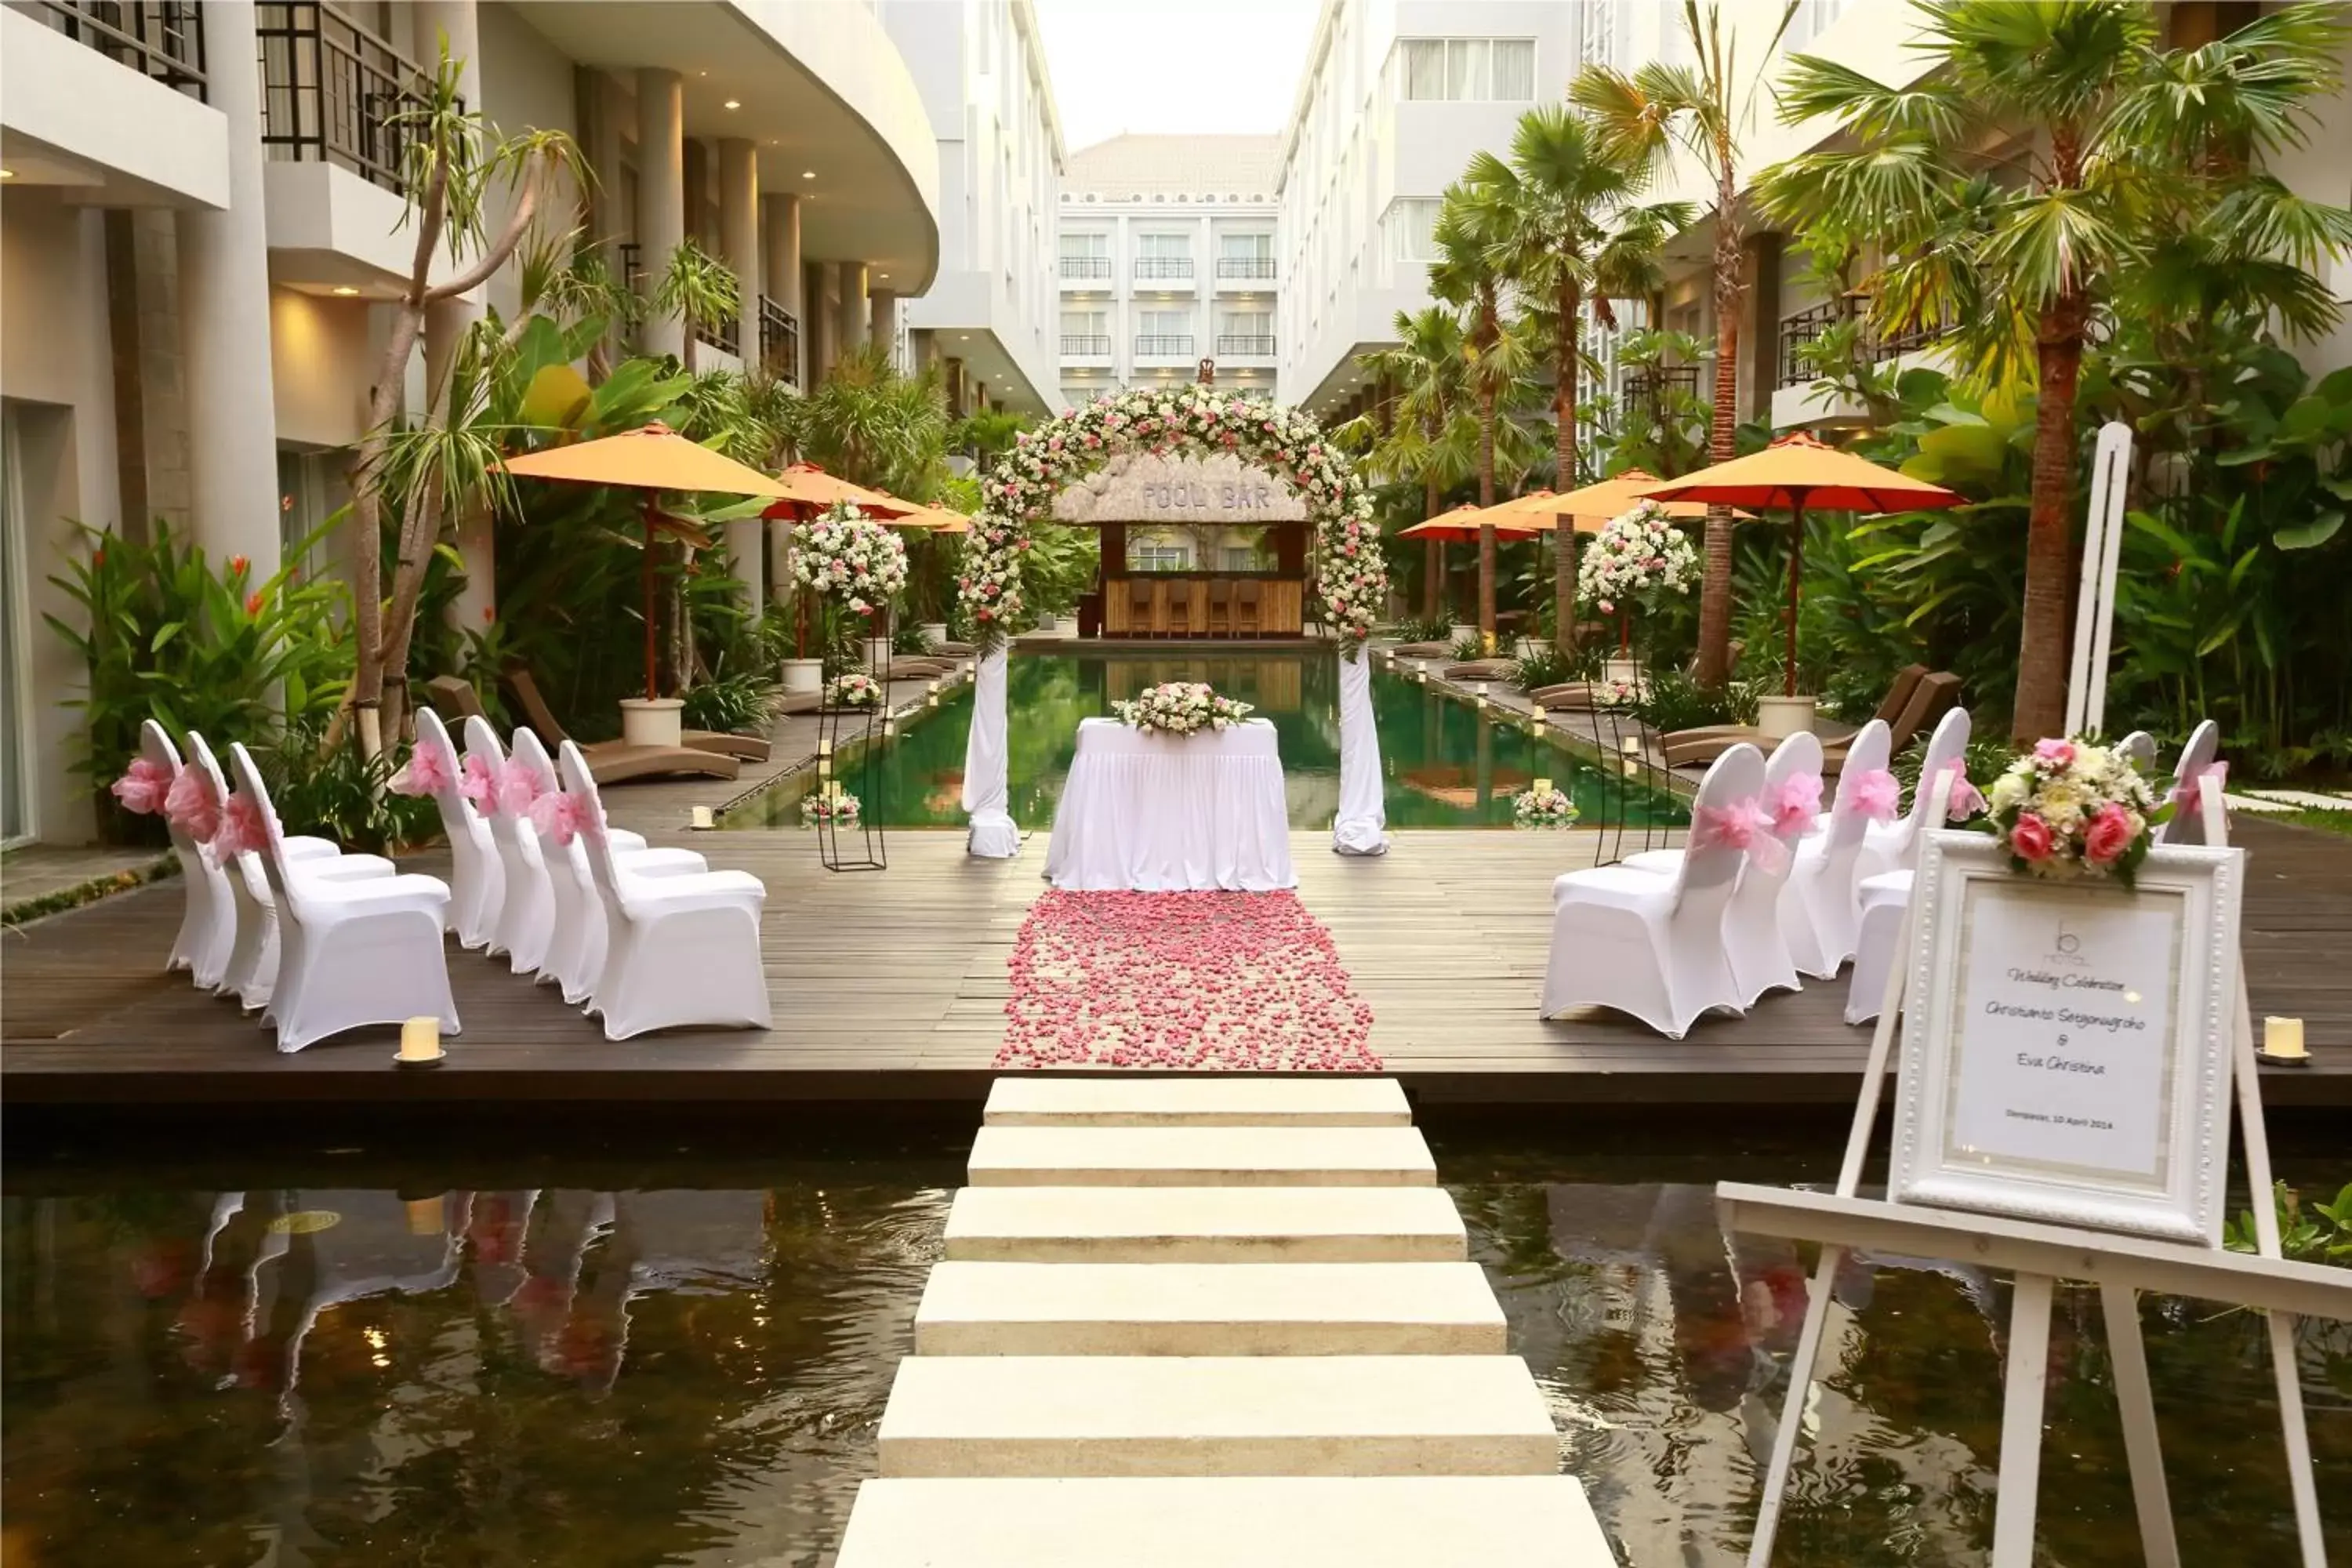 Area and facilities, Banquet Facilities in b Hotel Bali & Spa